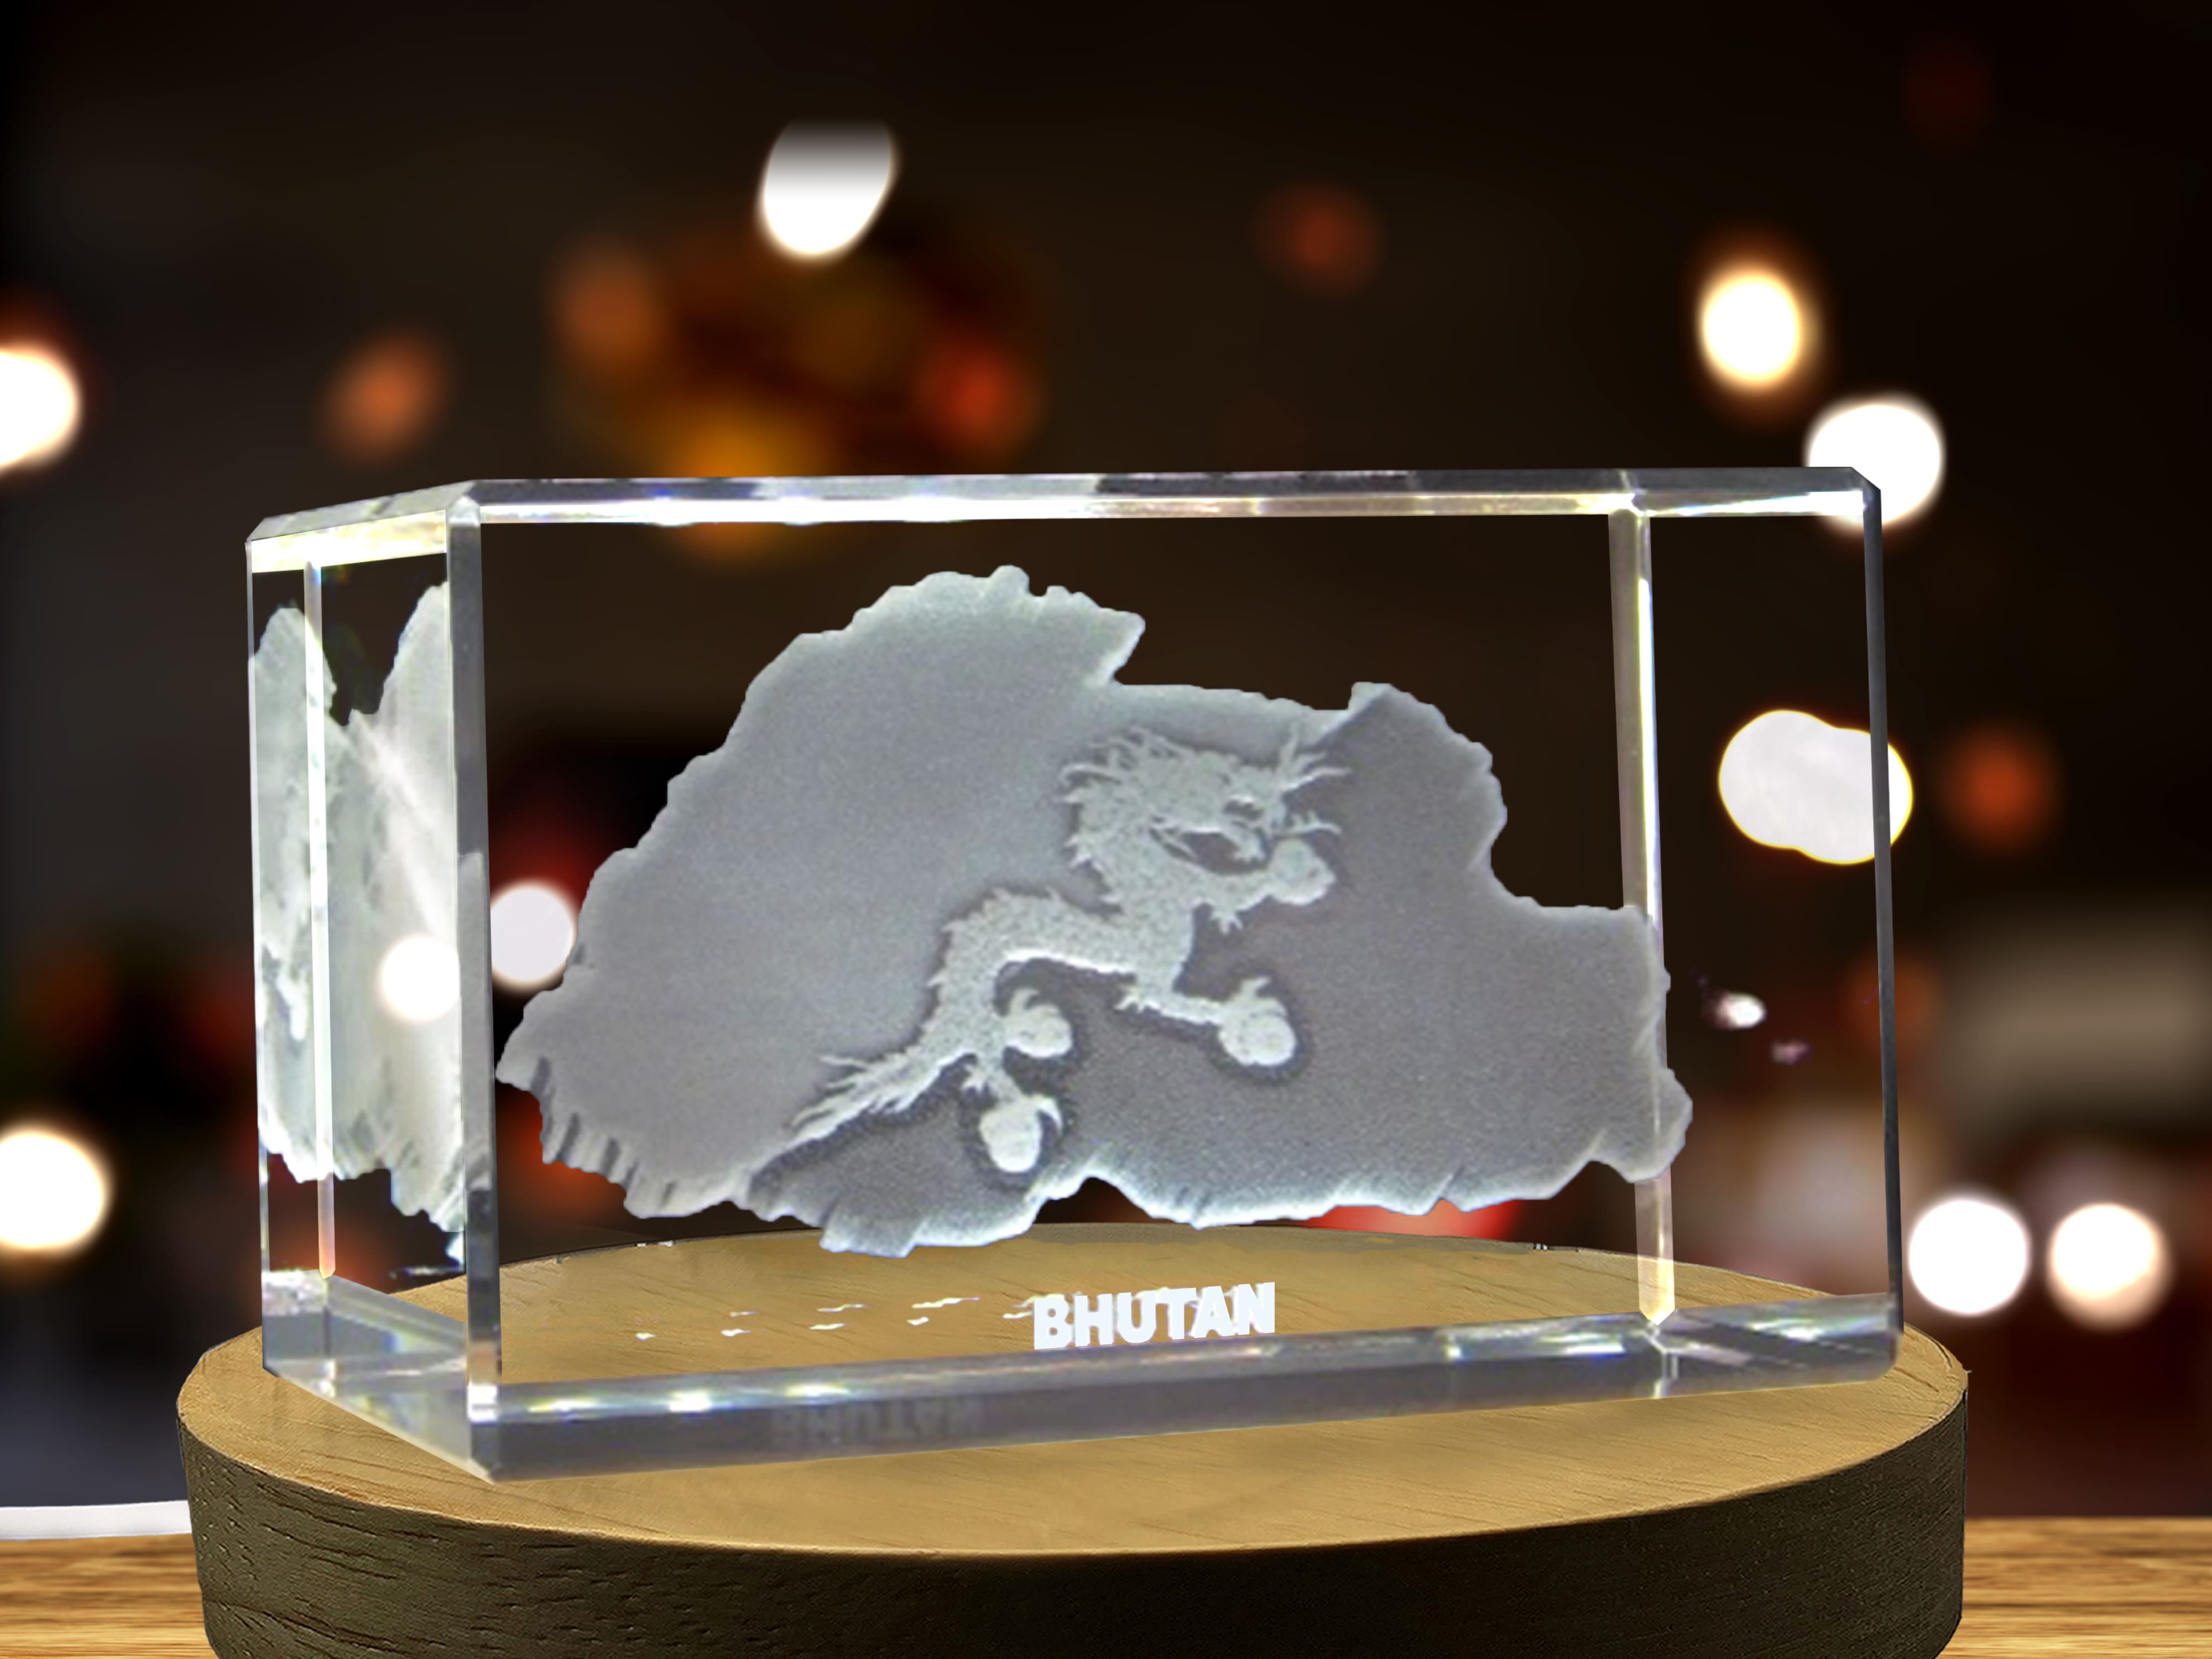 Bhutan 3D Engraved Crystal 3D Engraved Crystal Keepsake/Gift/Decor/Collectible/Souvenir A&B Crystal Collection